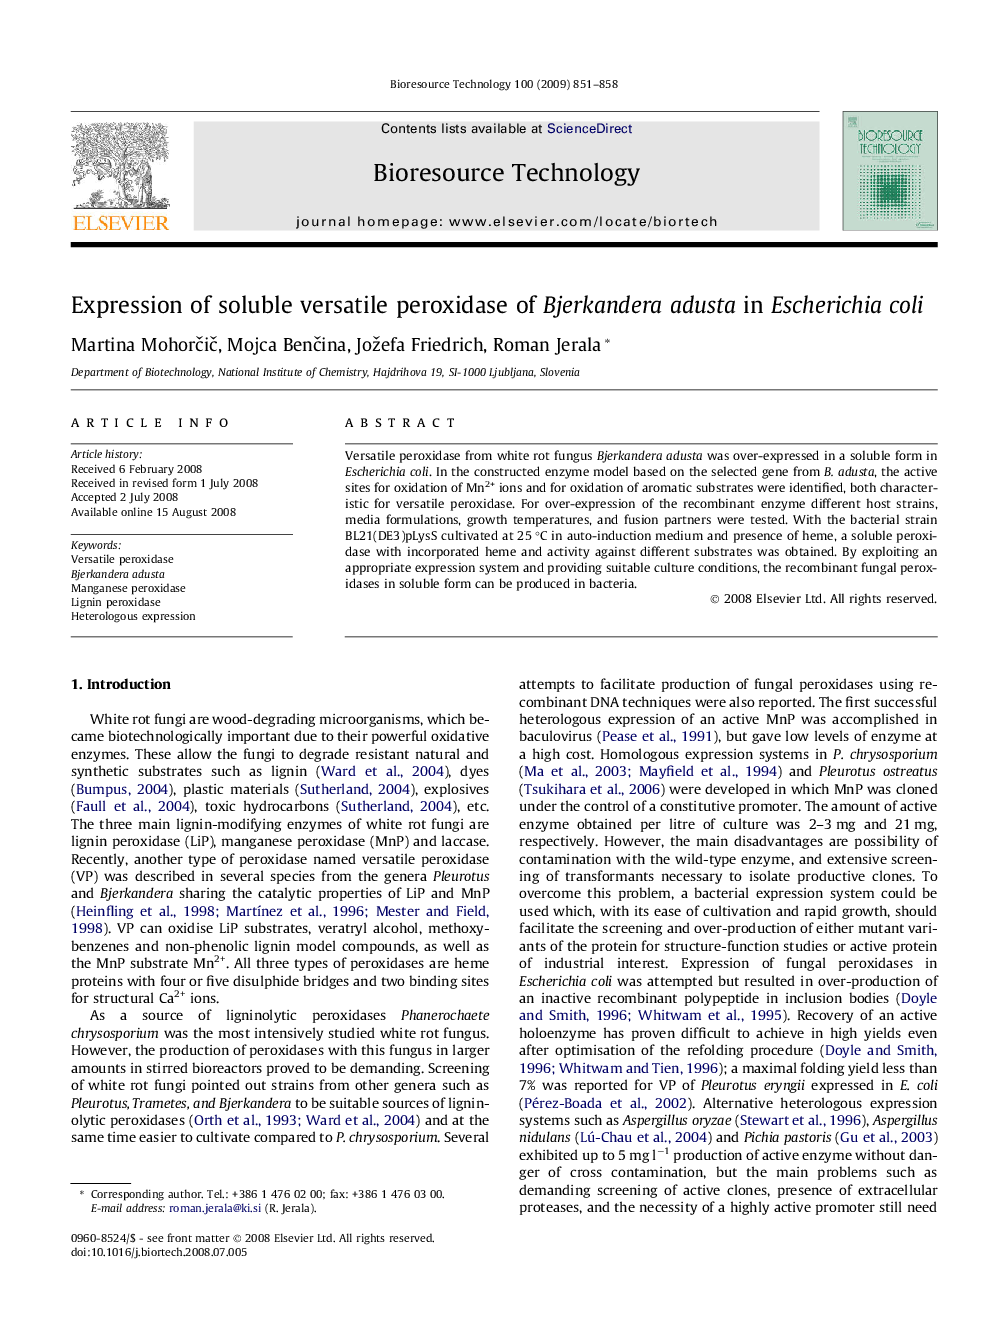 Expression of soluble versatile peroxidase of Bjerkandera adusta in Escherichia coli